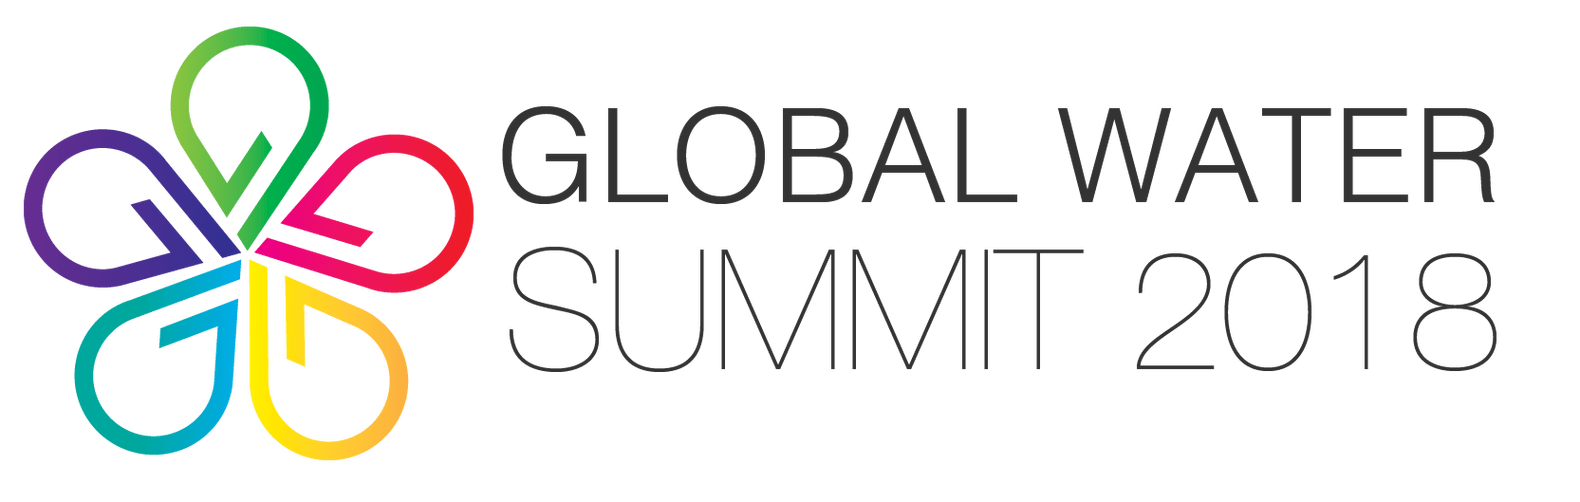 Global Water Summit 2018